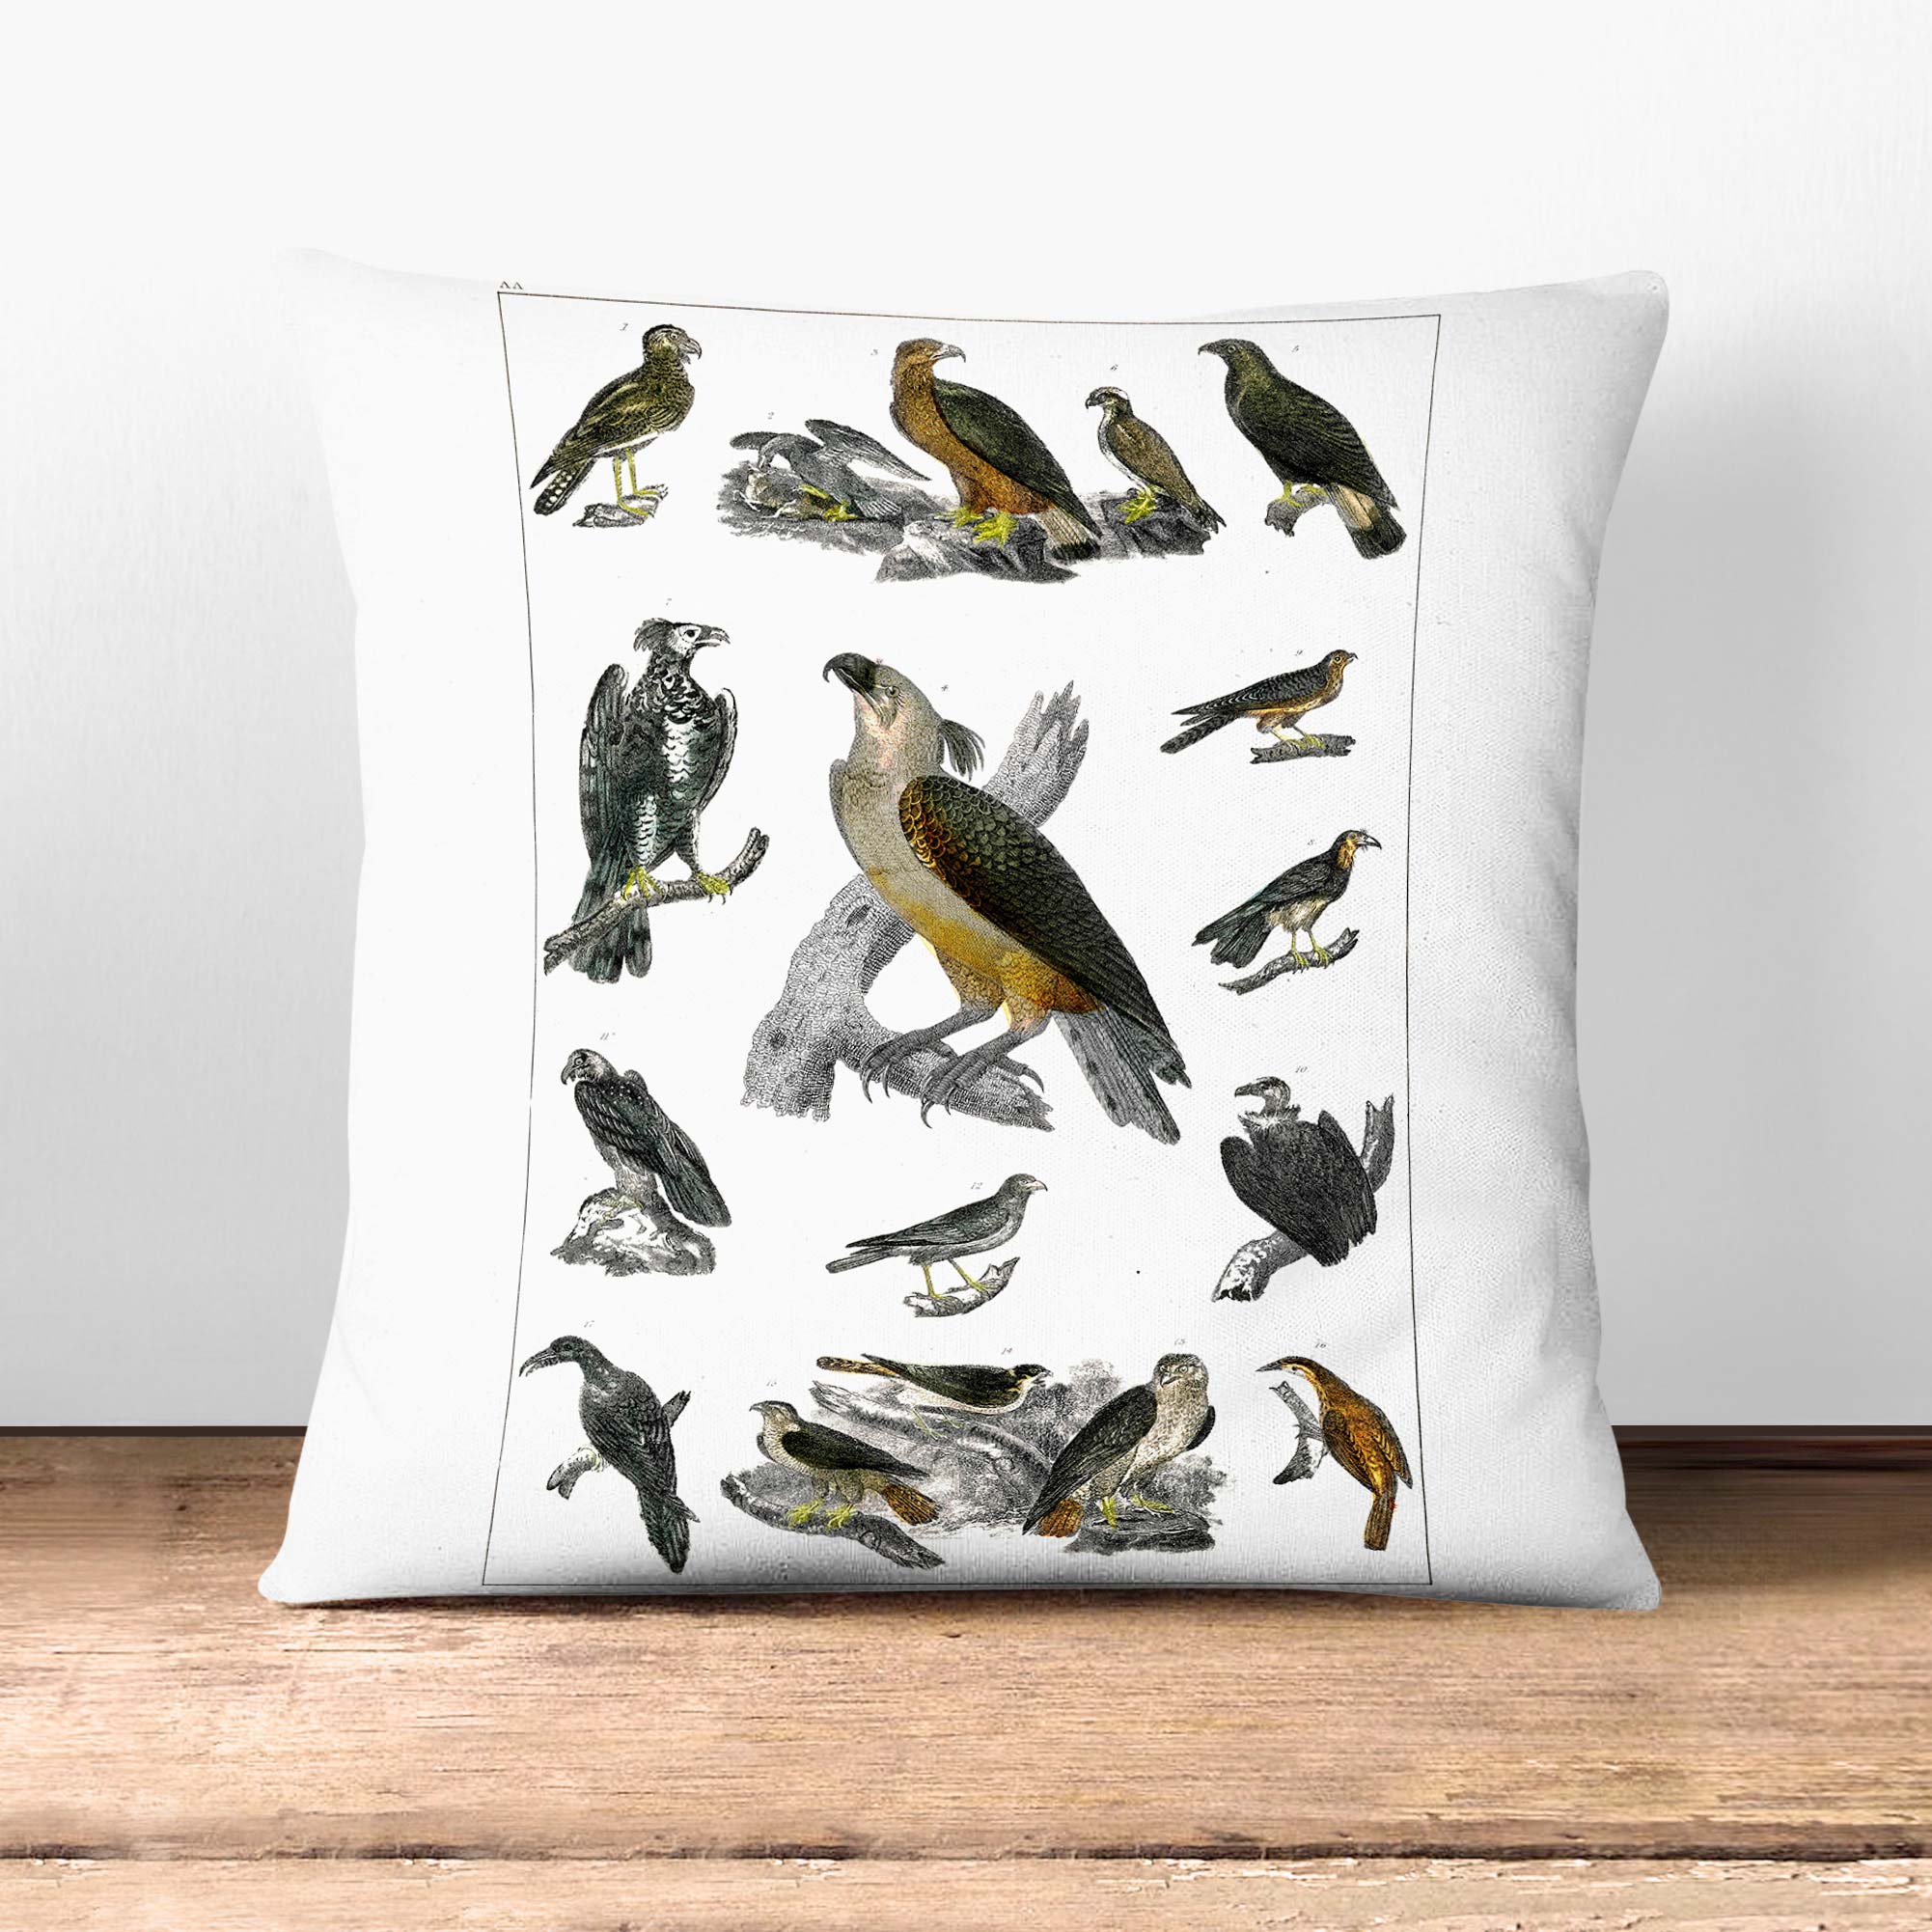 Birds of Prey XX Animal Vintage Oliver Goldsmith 1 x Soft Cushion Cover  Pillow | eBay